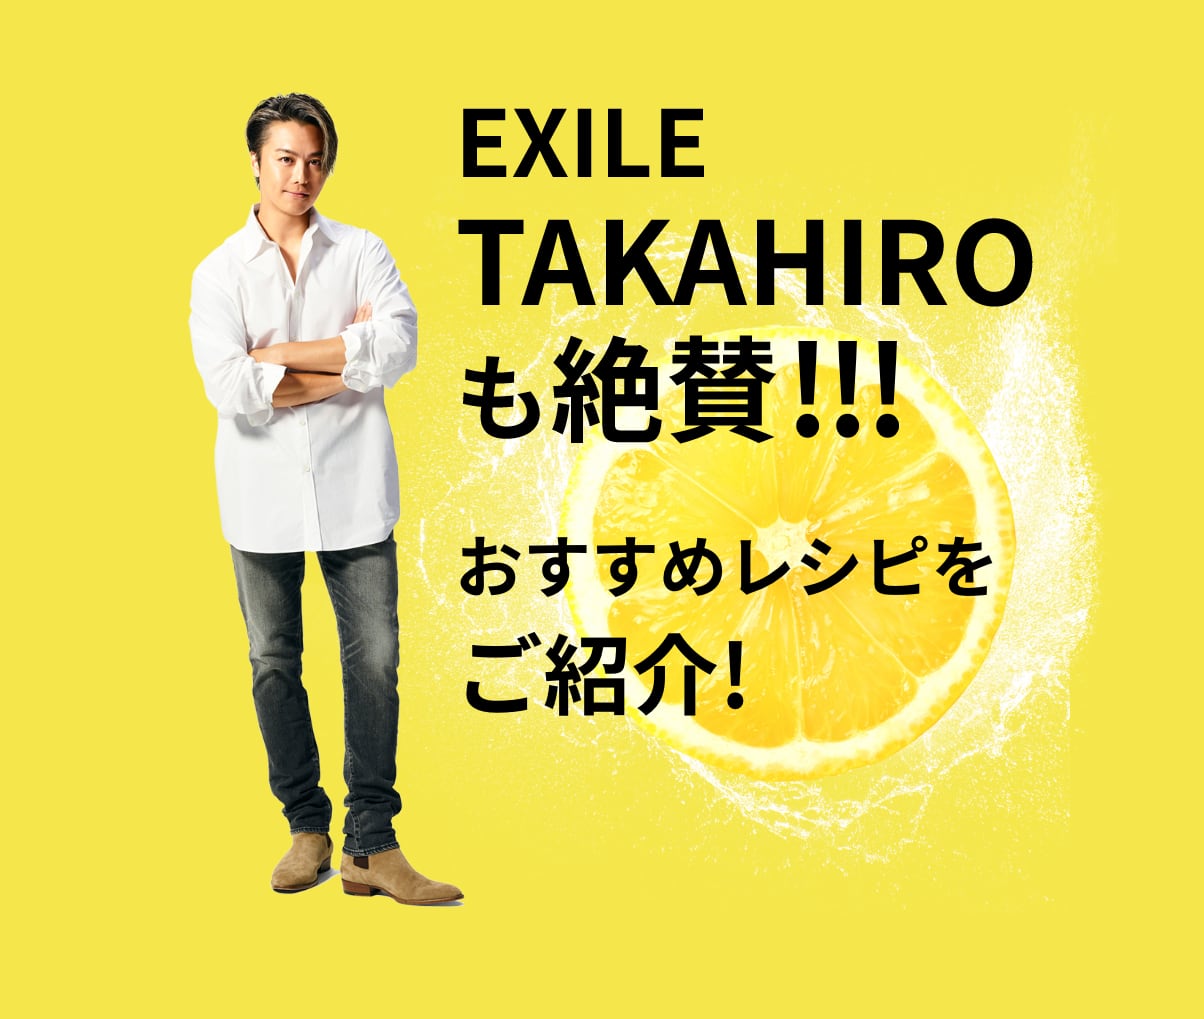 EXILE TAKAHIRO も絶賛!!! おすすめレシピをご紹介!